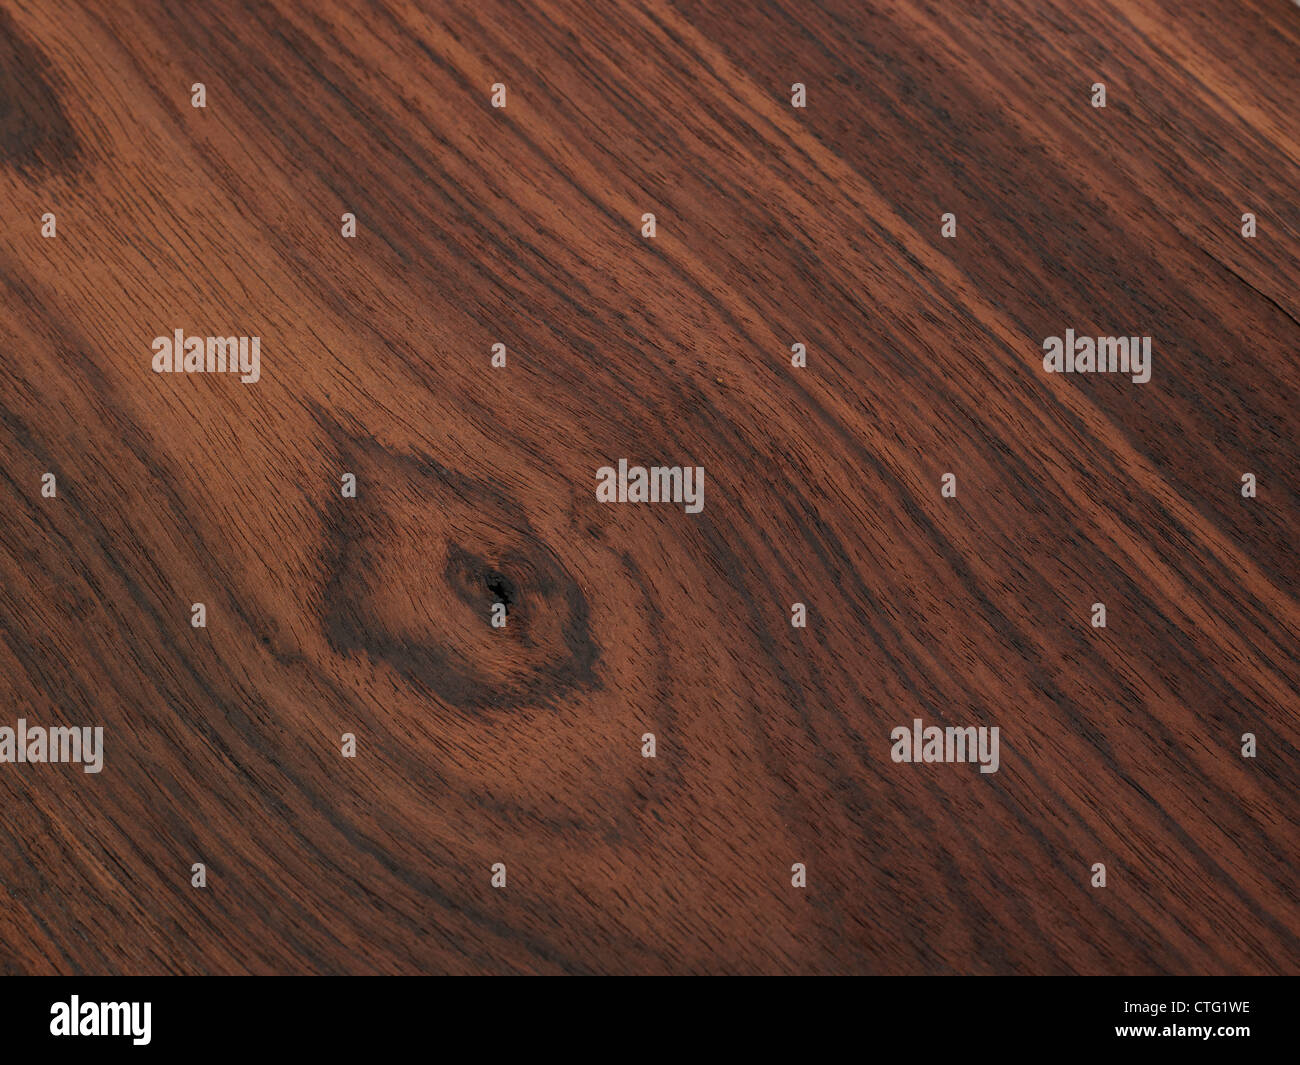 Wood grain table background Stock Photo - Alamy